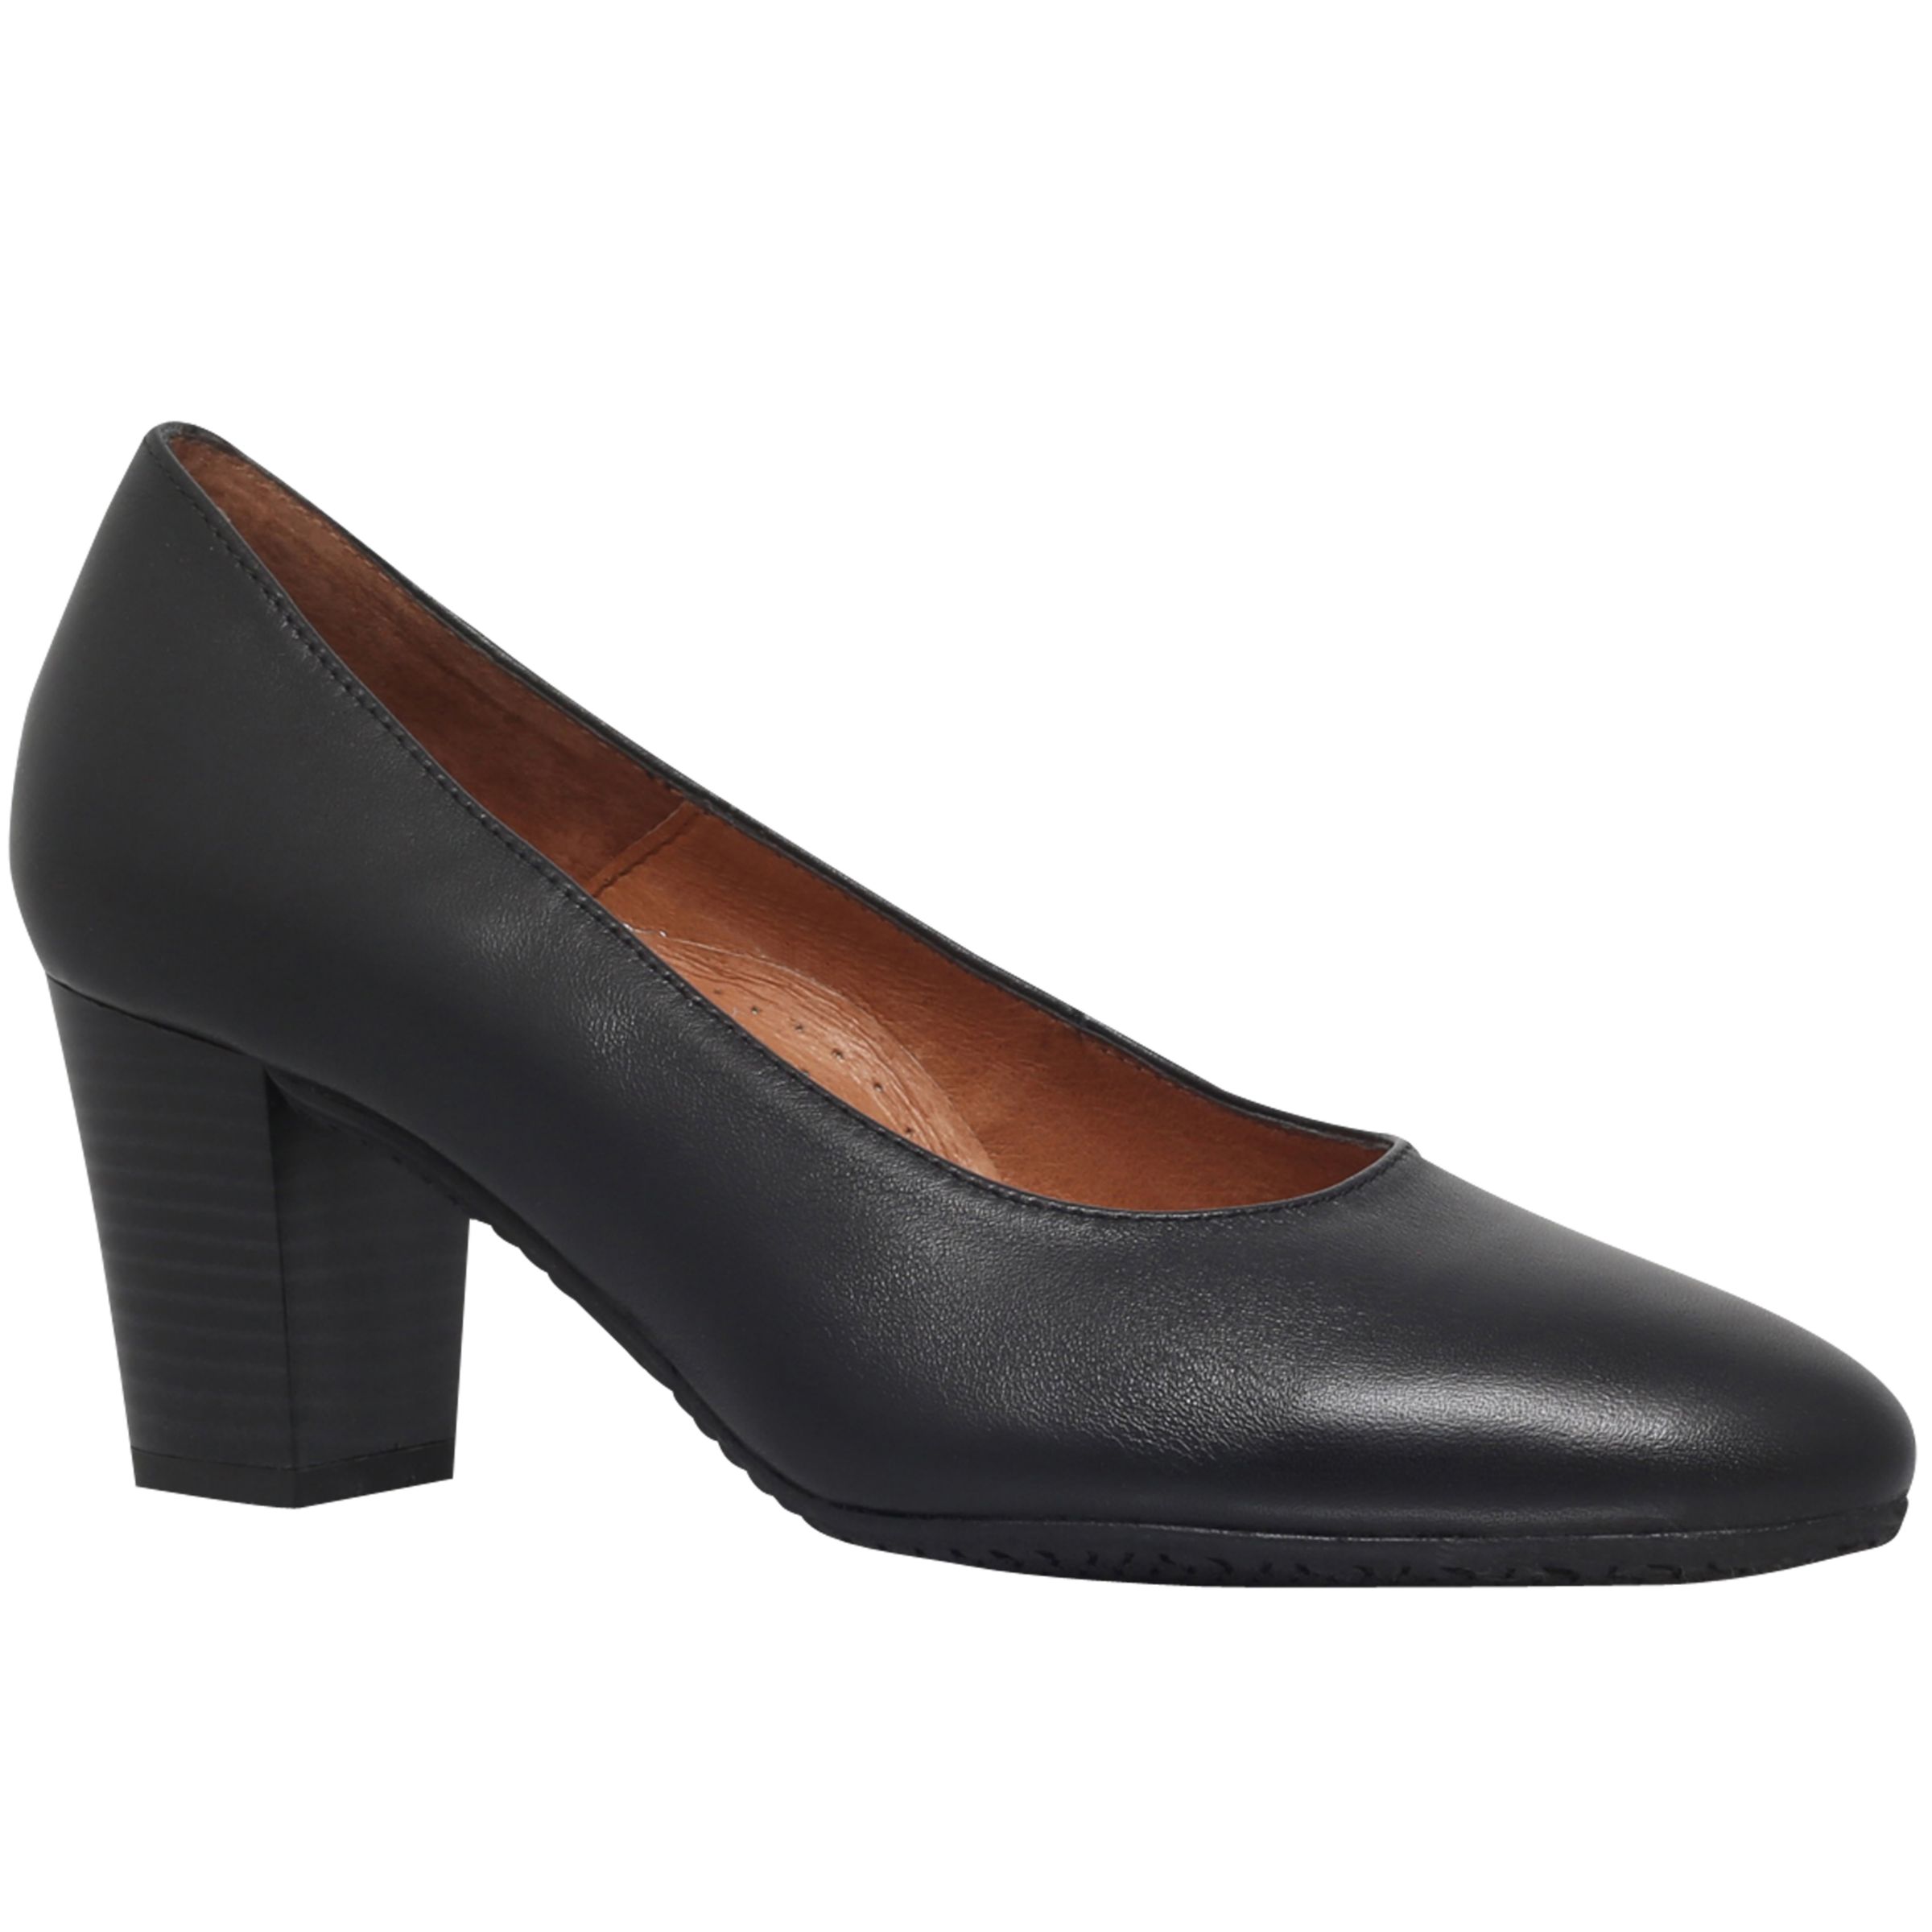 Carvela Comfort Air Block Heeled Court Shoes, Black, 5